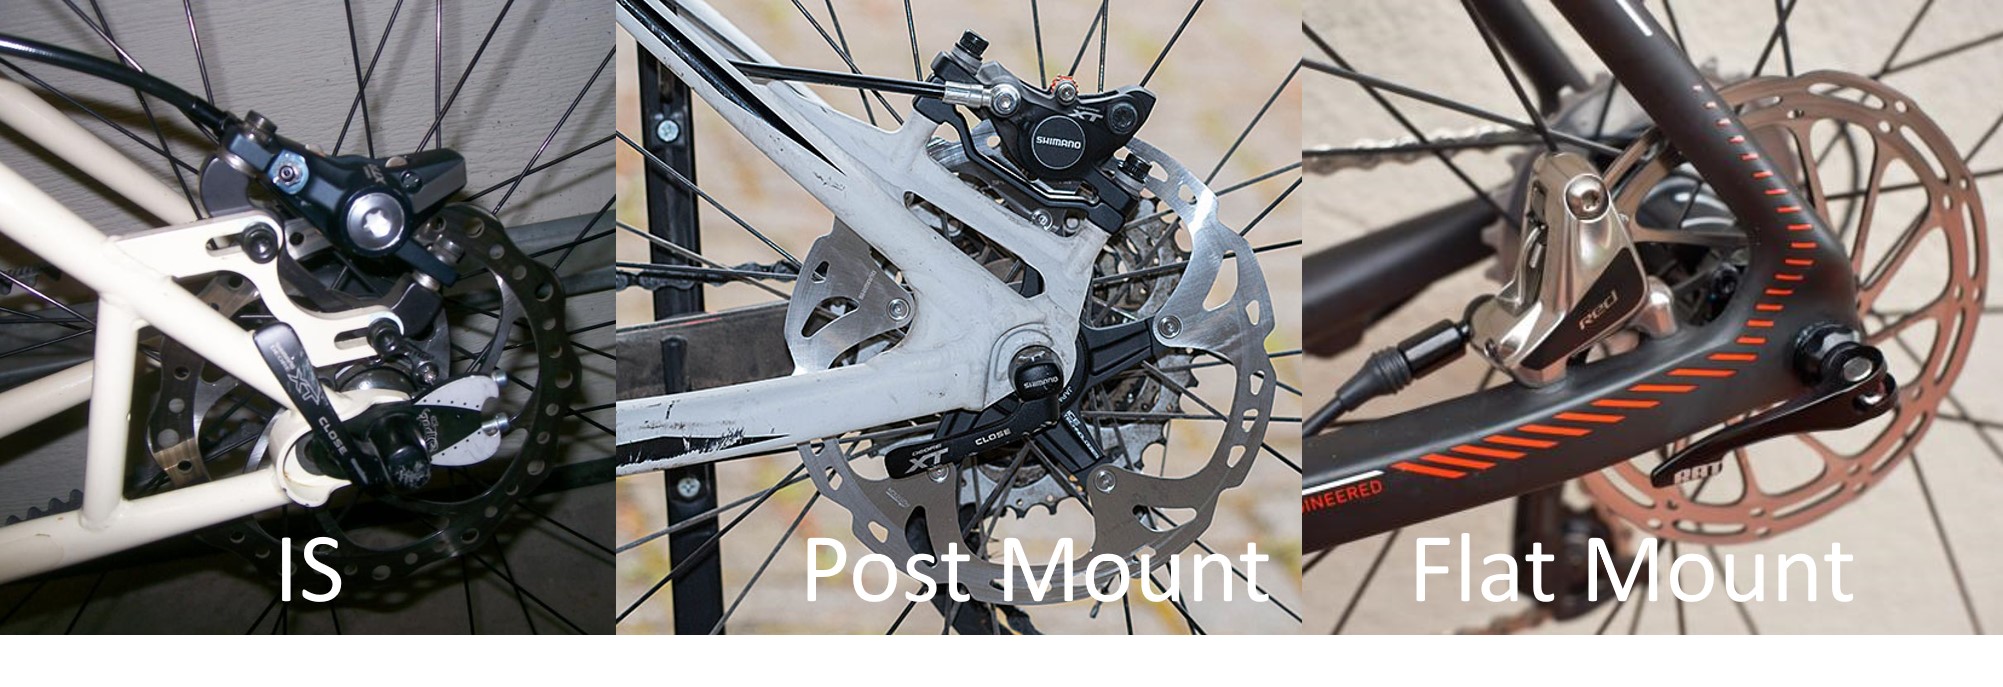 Jenis mounting disc brake pada frame sepeda